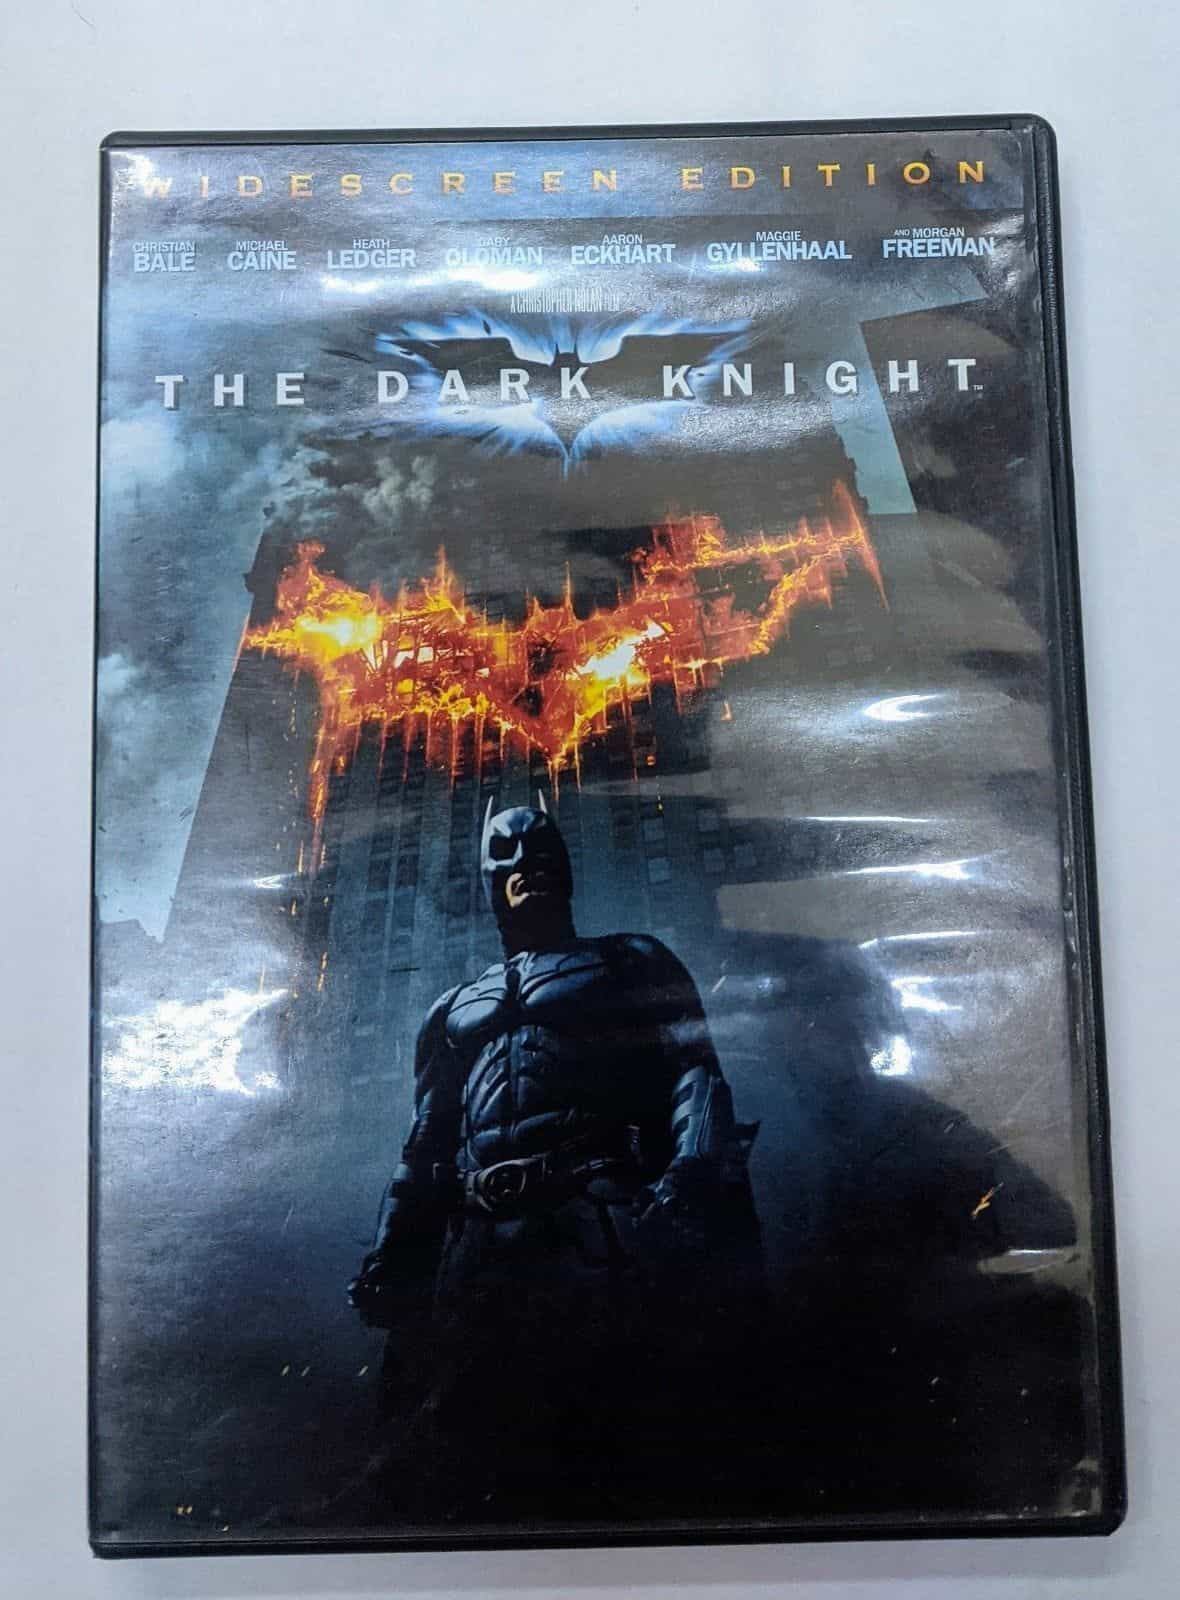 The Dark Knight DVD Movie (Widescreen edition)